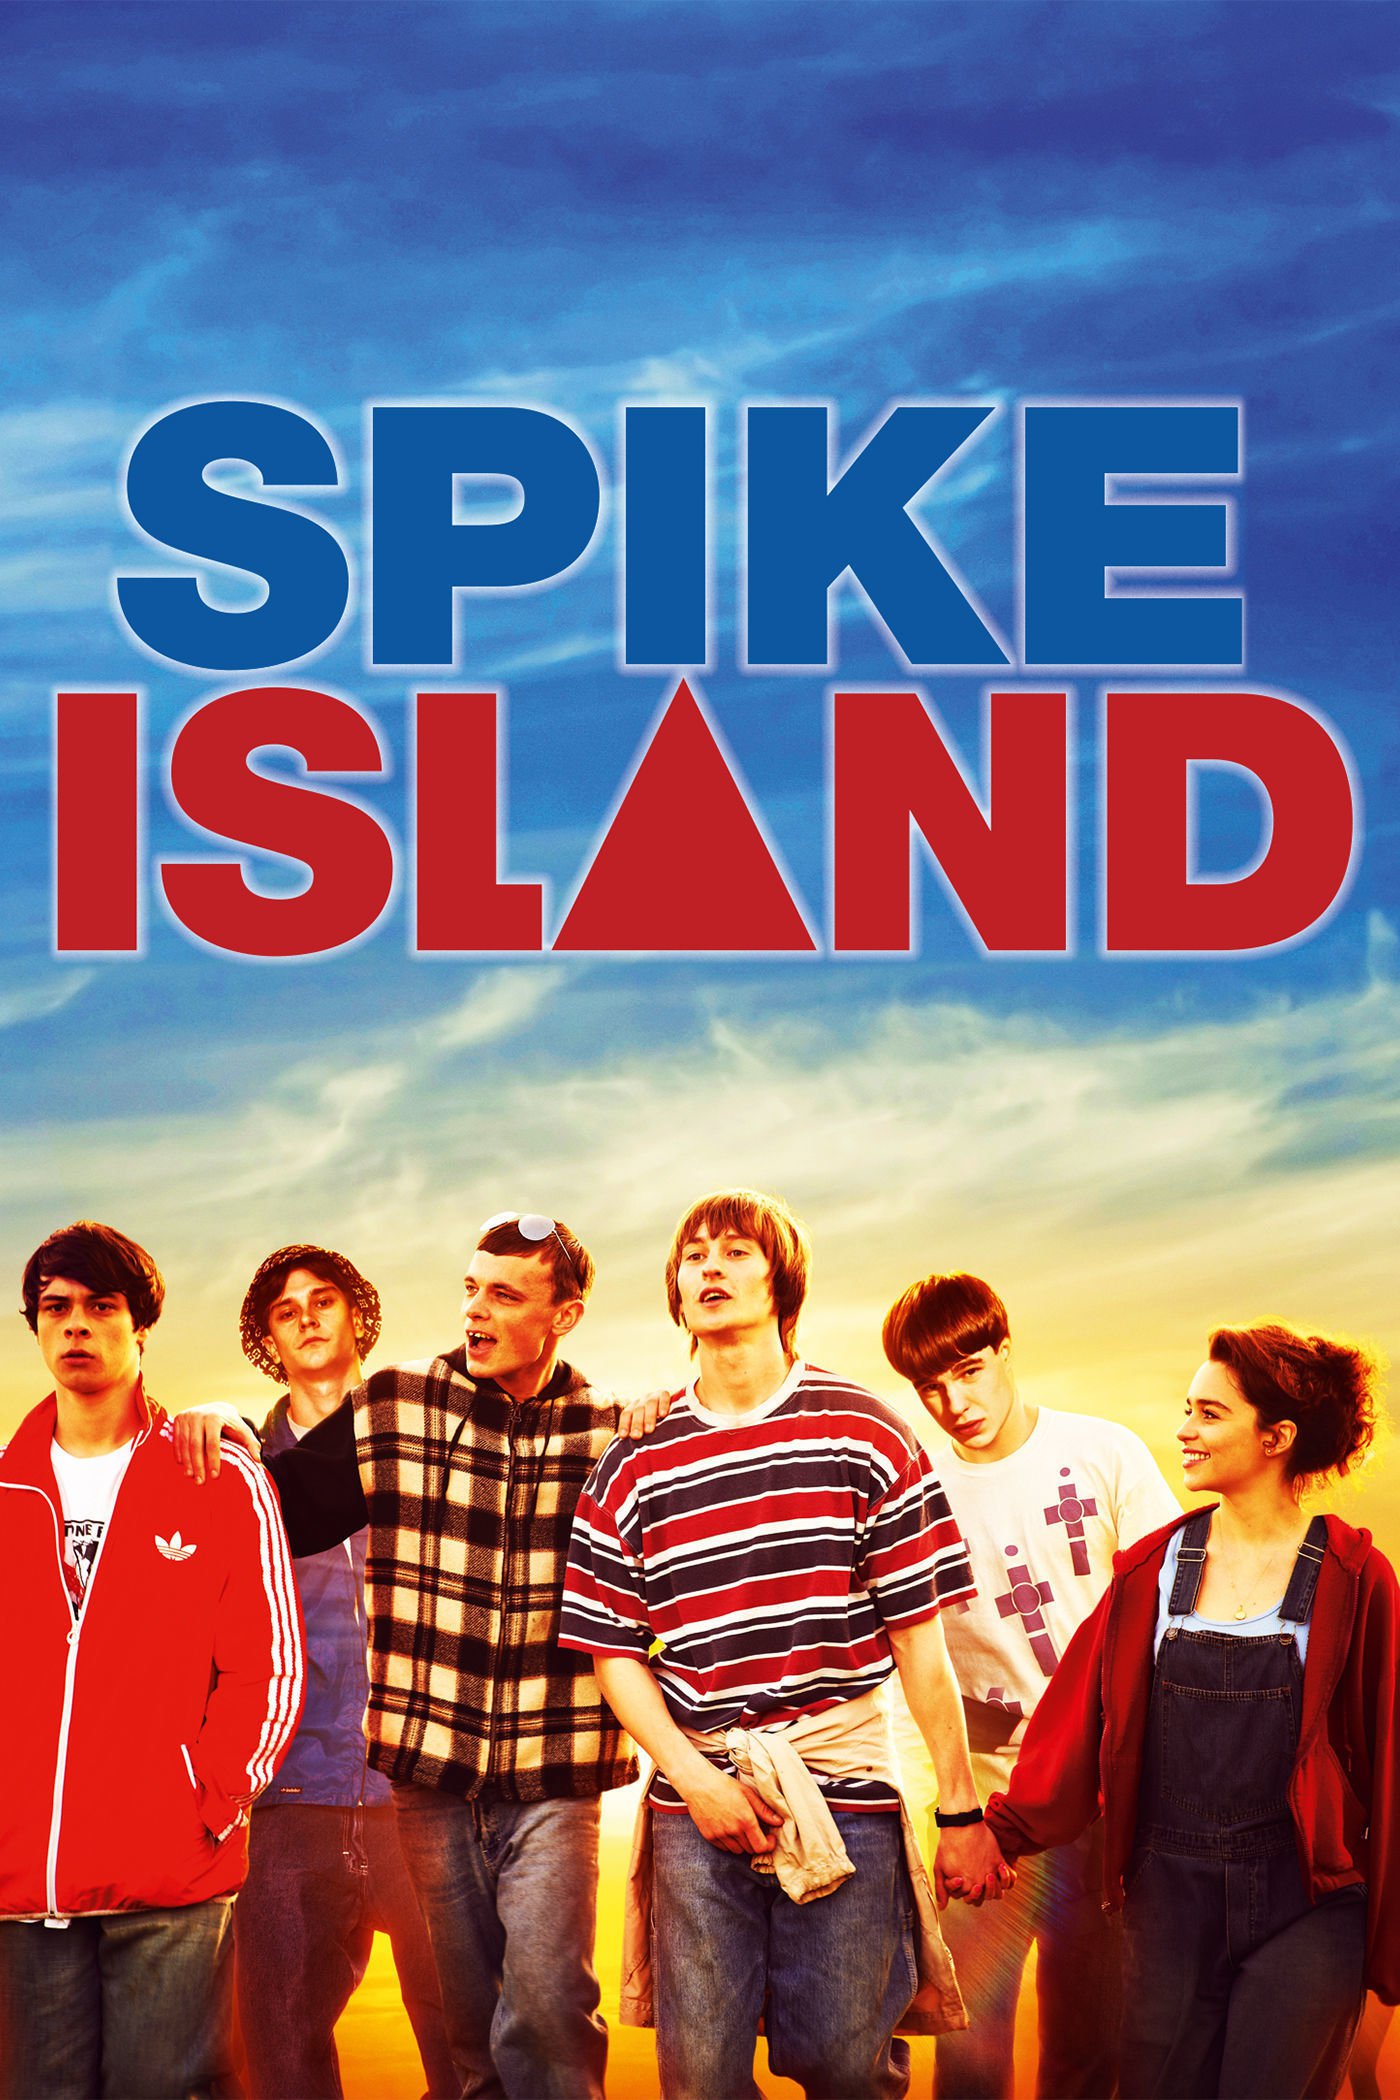 Spike Island [Sub-ITA] (2013)